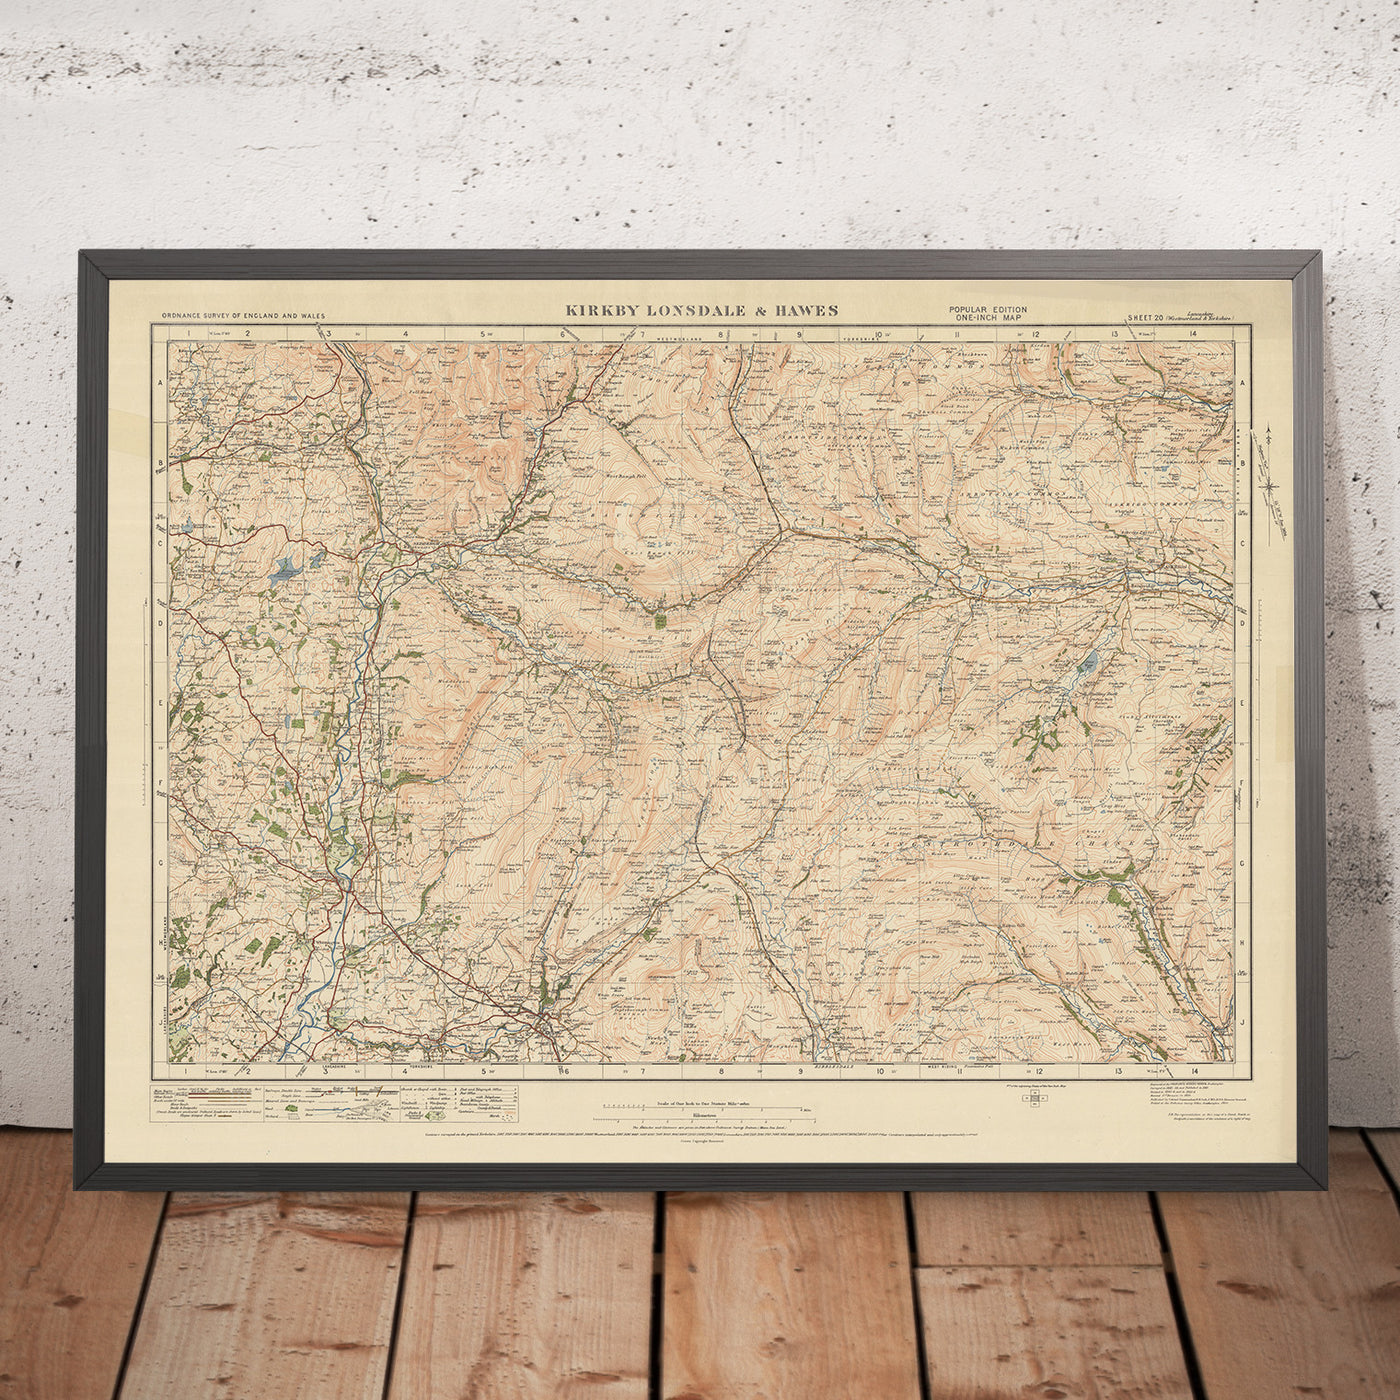 Alte Ordnance Survey Karte, Blatt 20 - Kirkby Lonsdale & Hawes, 1925: Ingleton, Sedbergh, Askrigg, Yorkshire Dales National Park